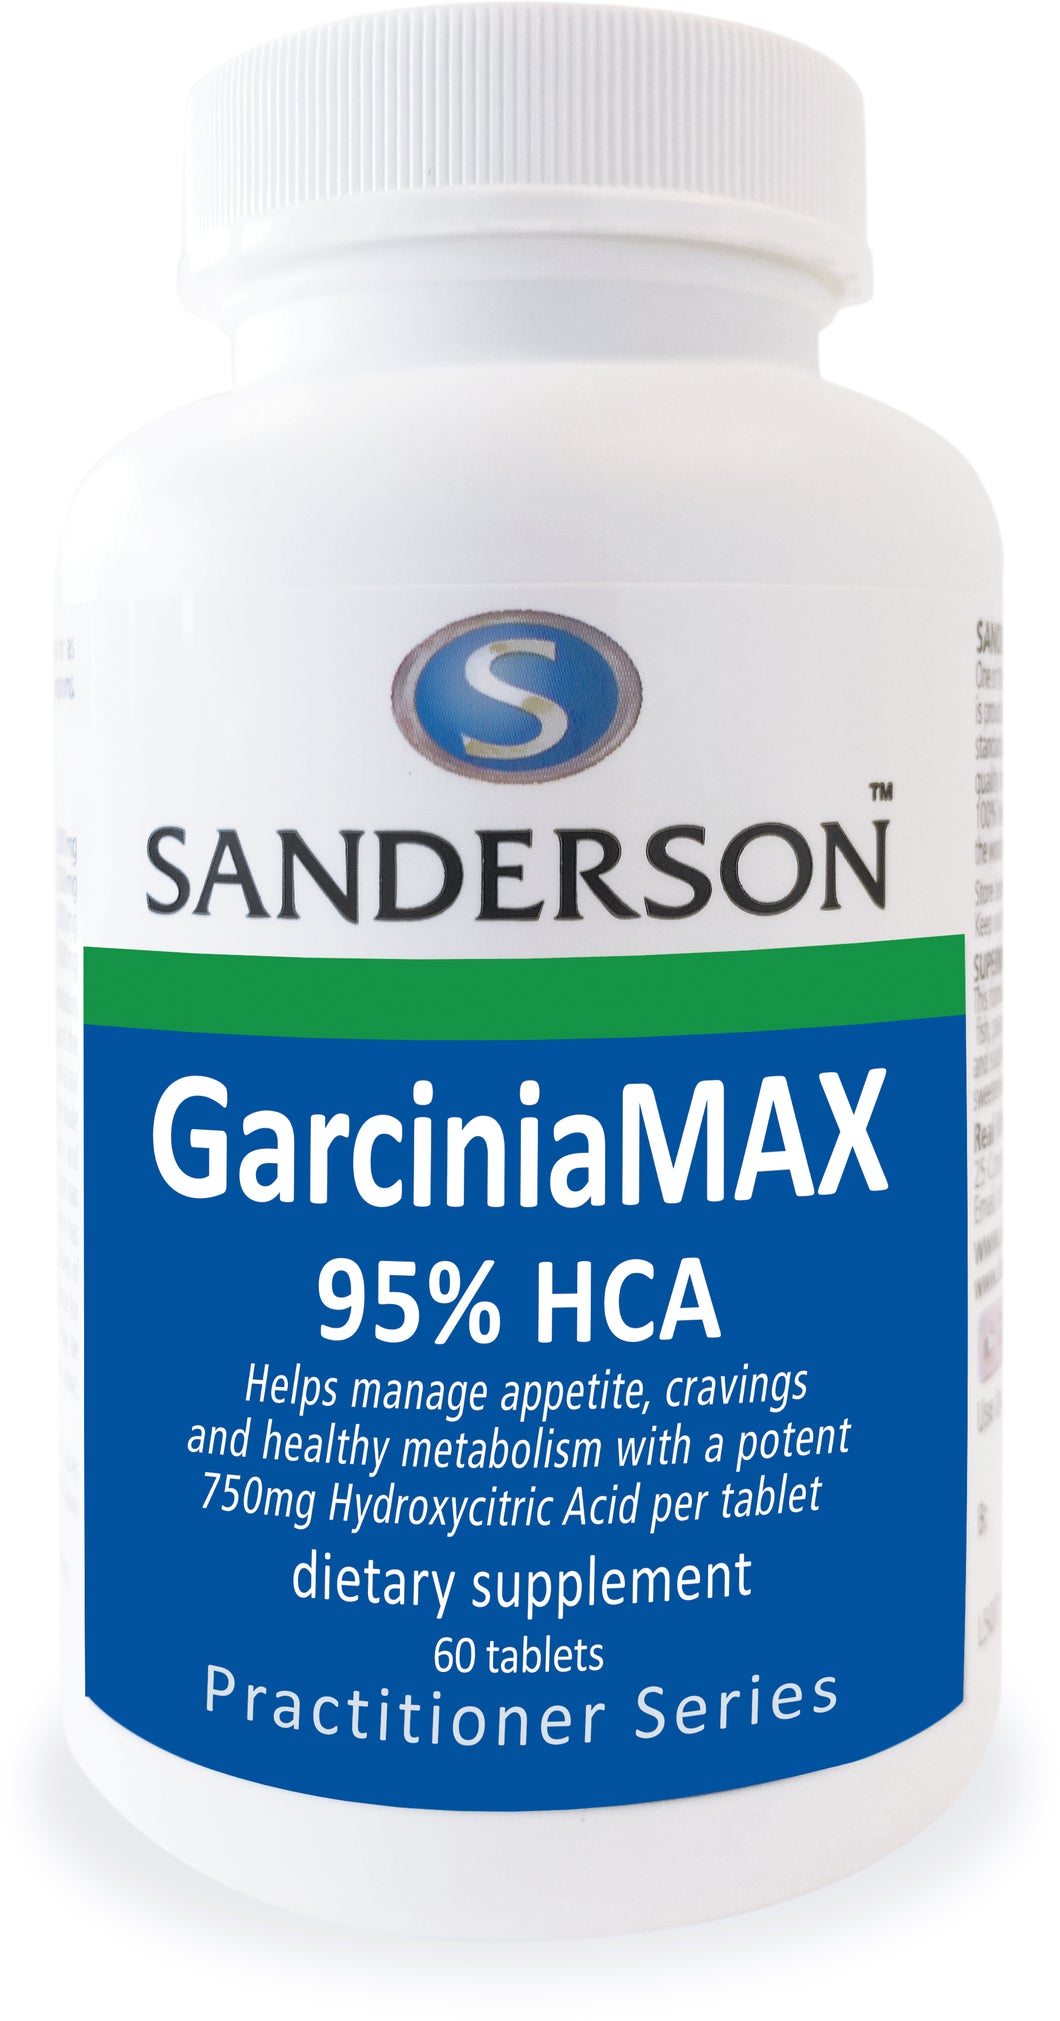 GarciniaMAX ၉၅%HCA င့္တက္ဘလက္မ်ား